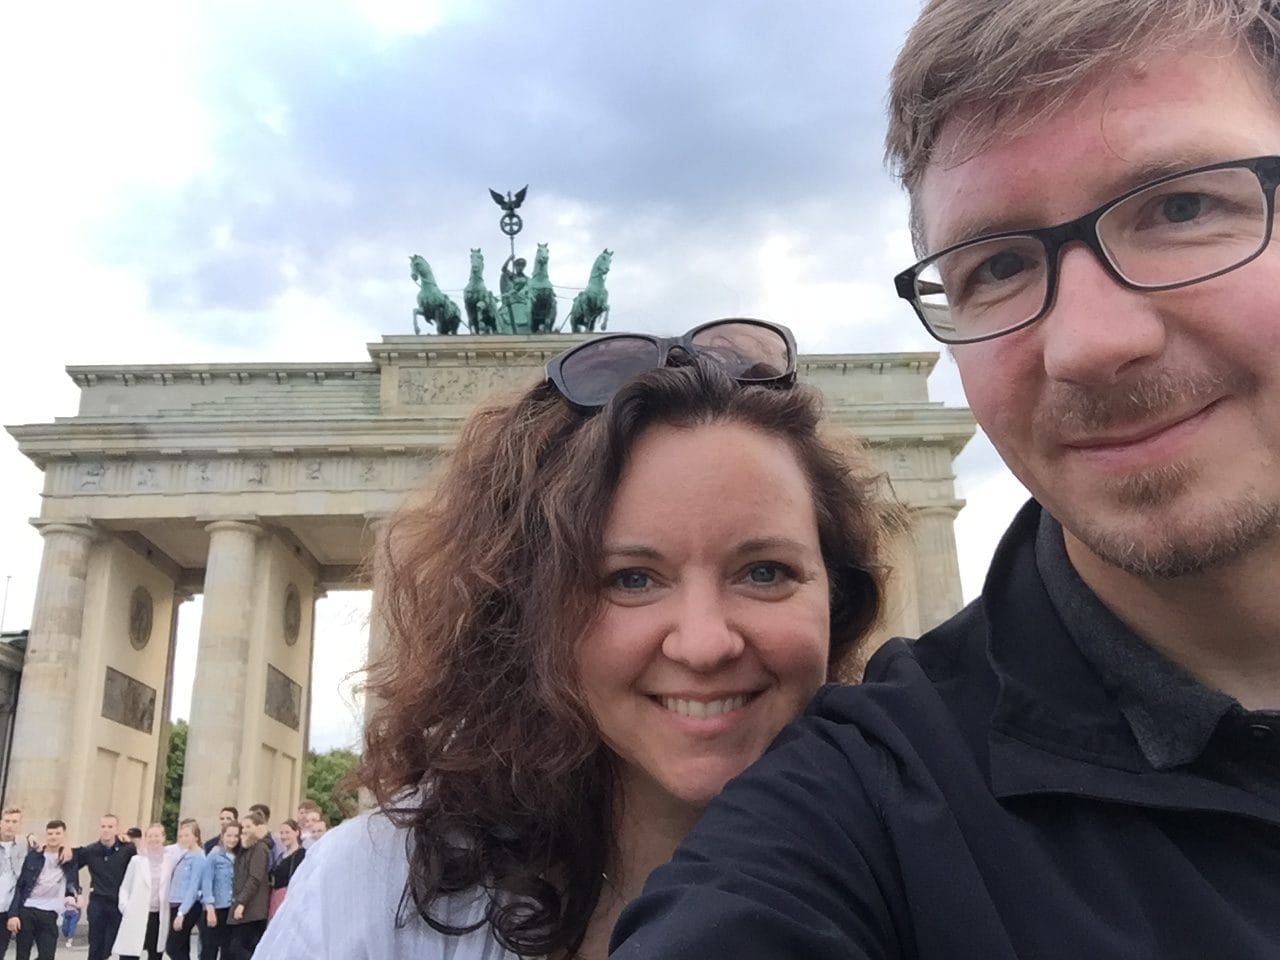 Aaron & Cate at Brandenburg Gate